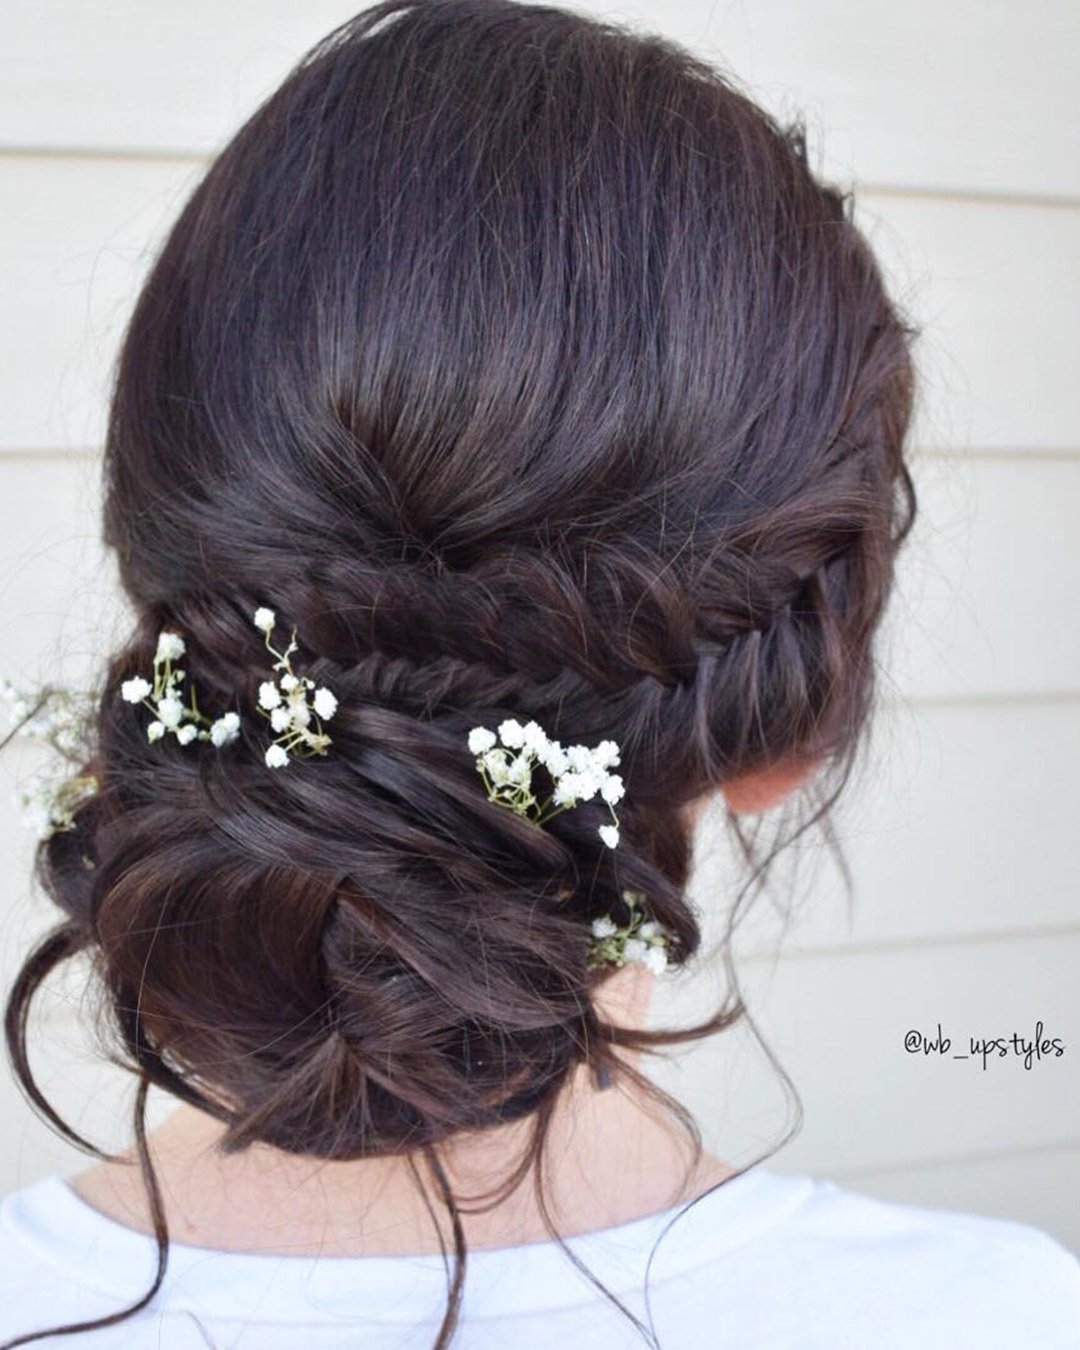 low bun hairstyles for wedding elegant with braid wb_upstyles